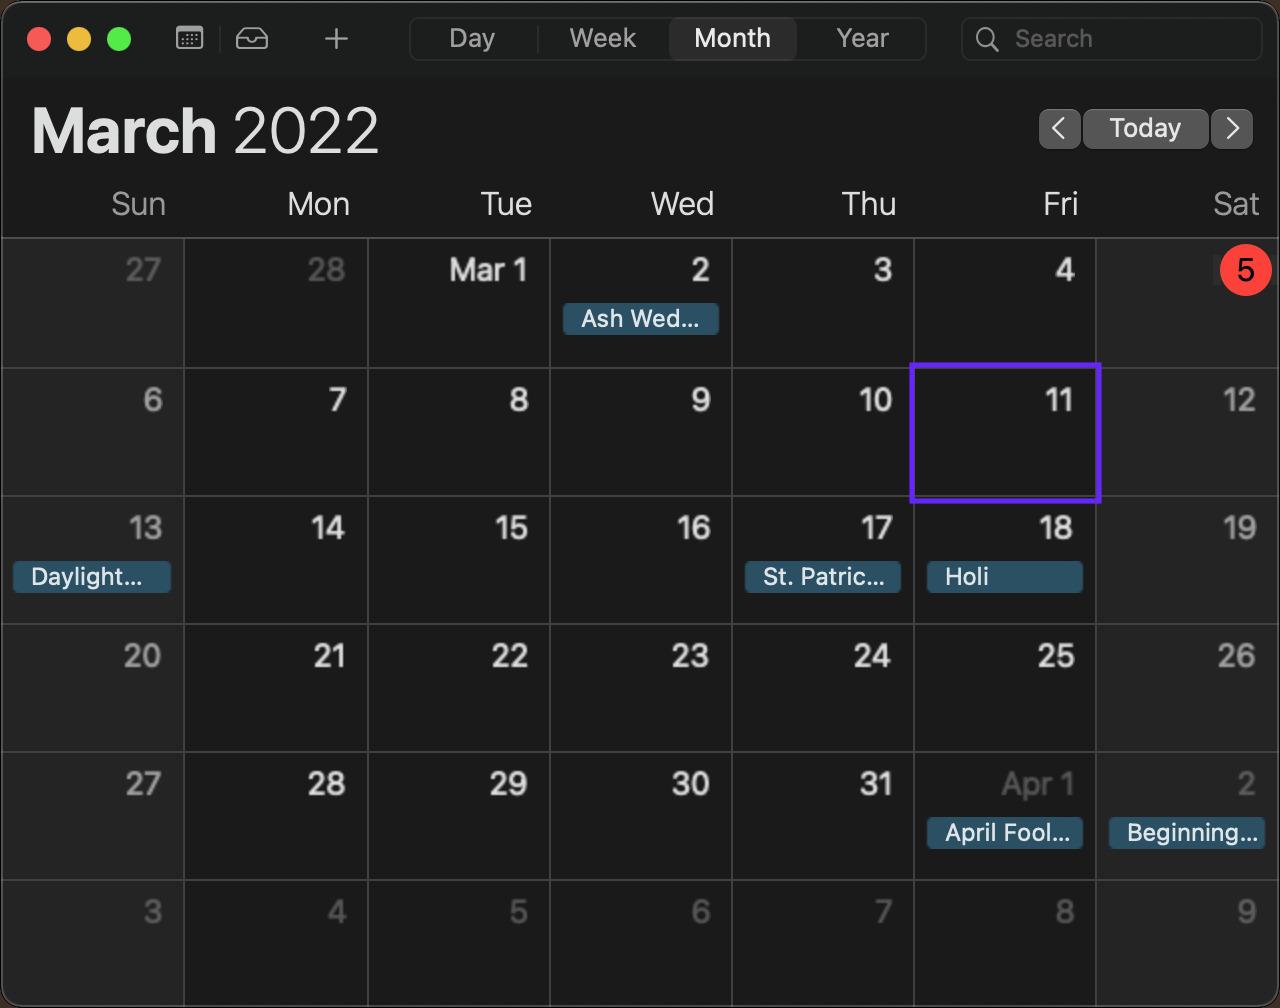 A calendar with Friday the 11th highlighted